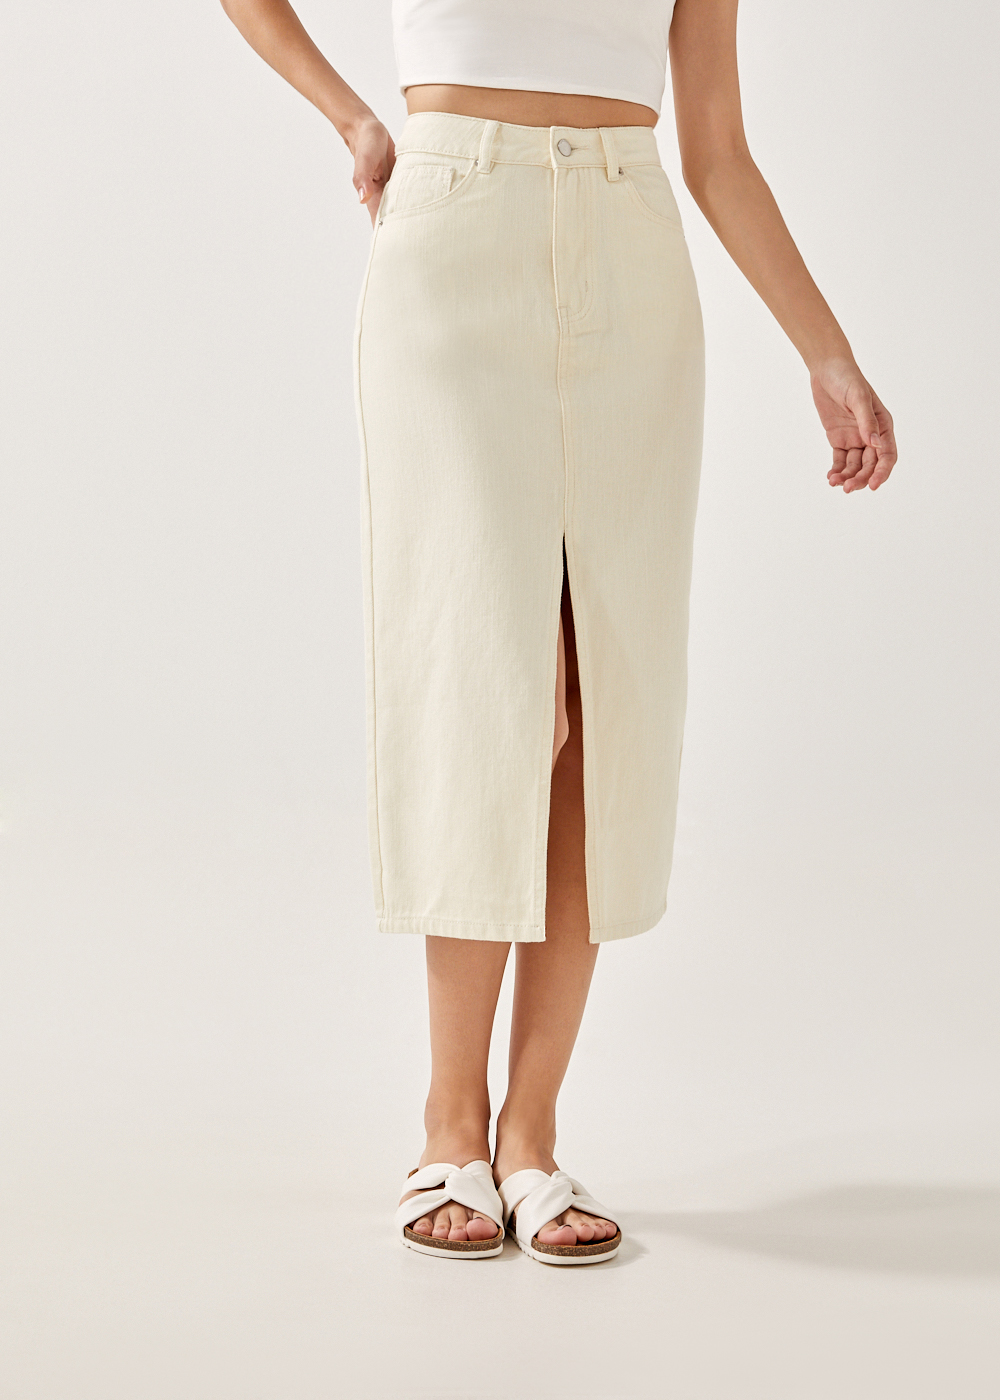 Buy Juleen Denim Column Skirt @ Love, Bonito Malaysia | Shop Women's ...